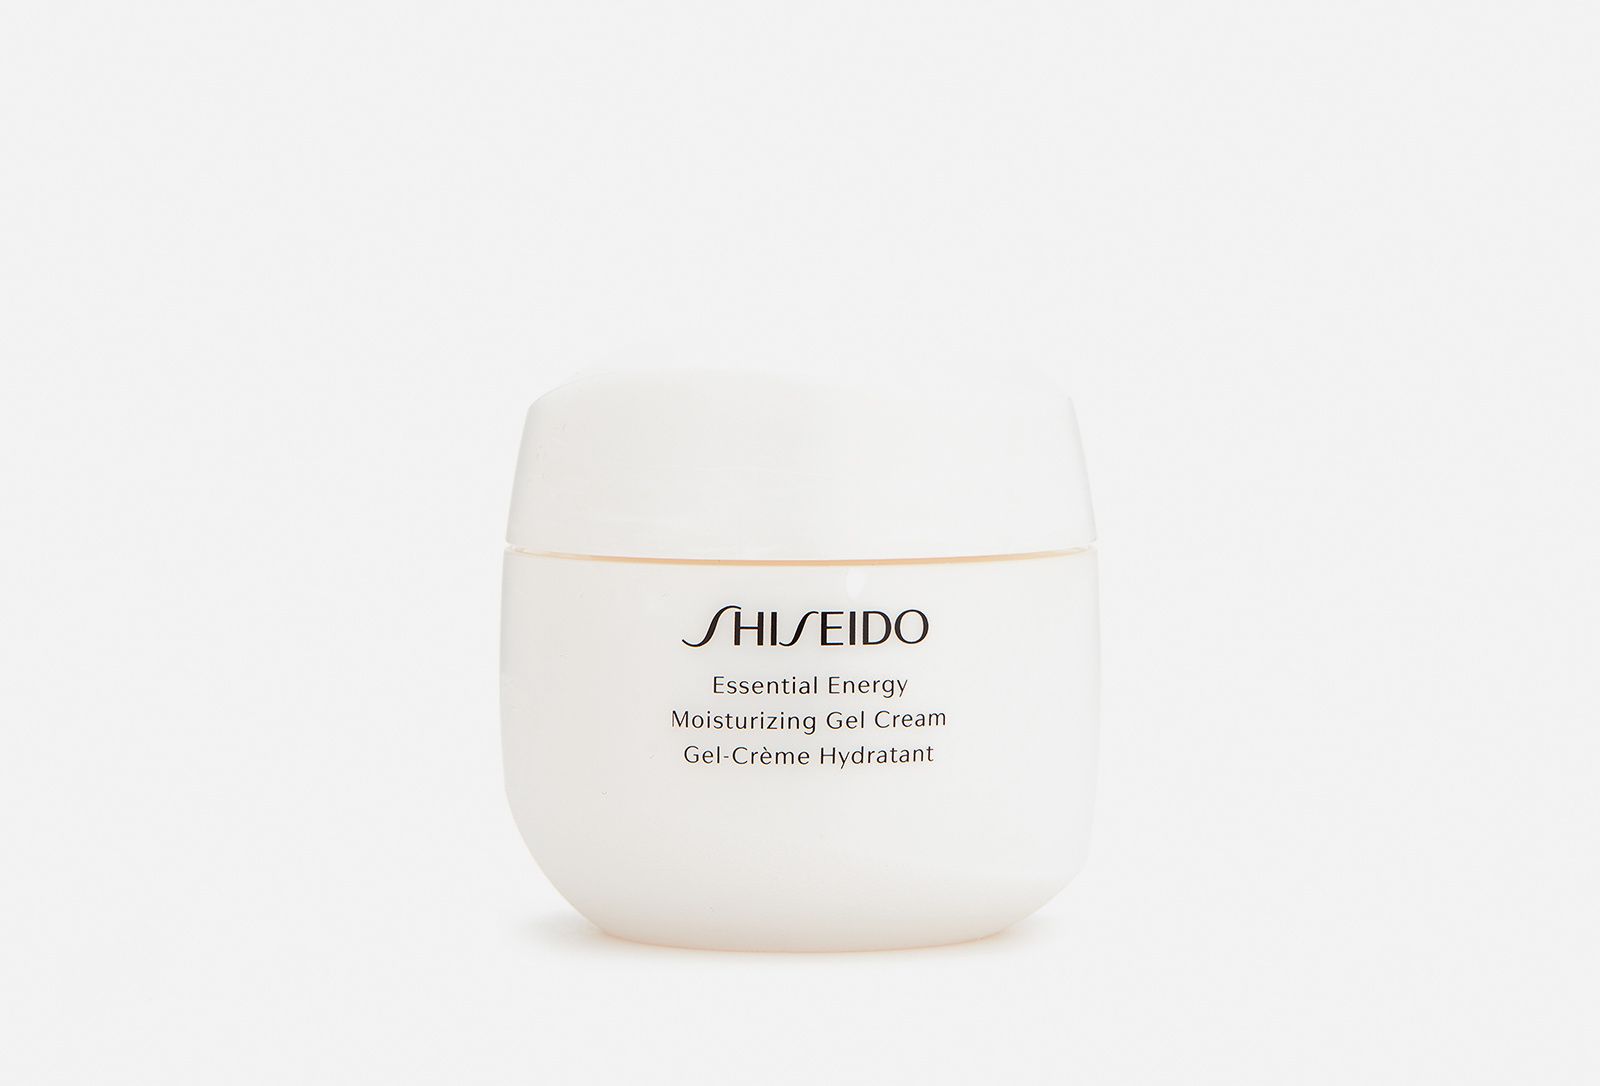 Shiseido essential. Шисейдо Essential Energy Hydrating Cream. Shiseido Essential Energy Cream. Shiseido Essential Energy Moisturizing Cream. Shiseido Essential Energy Moisturizing Gel Cream.